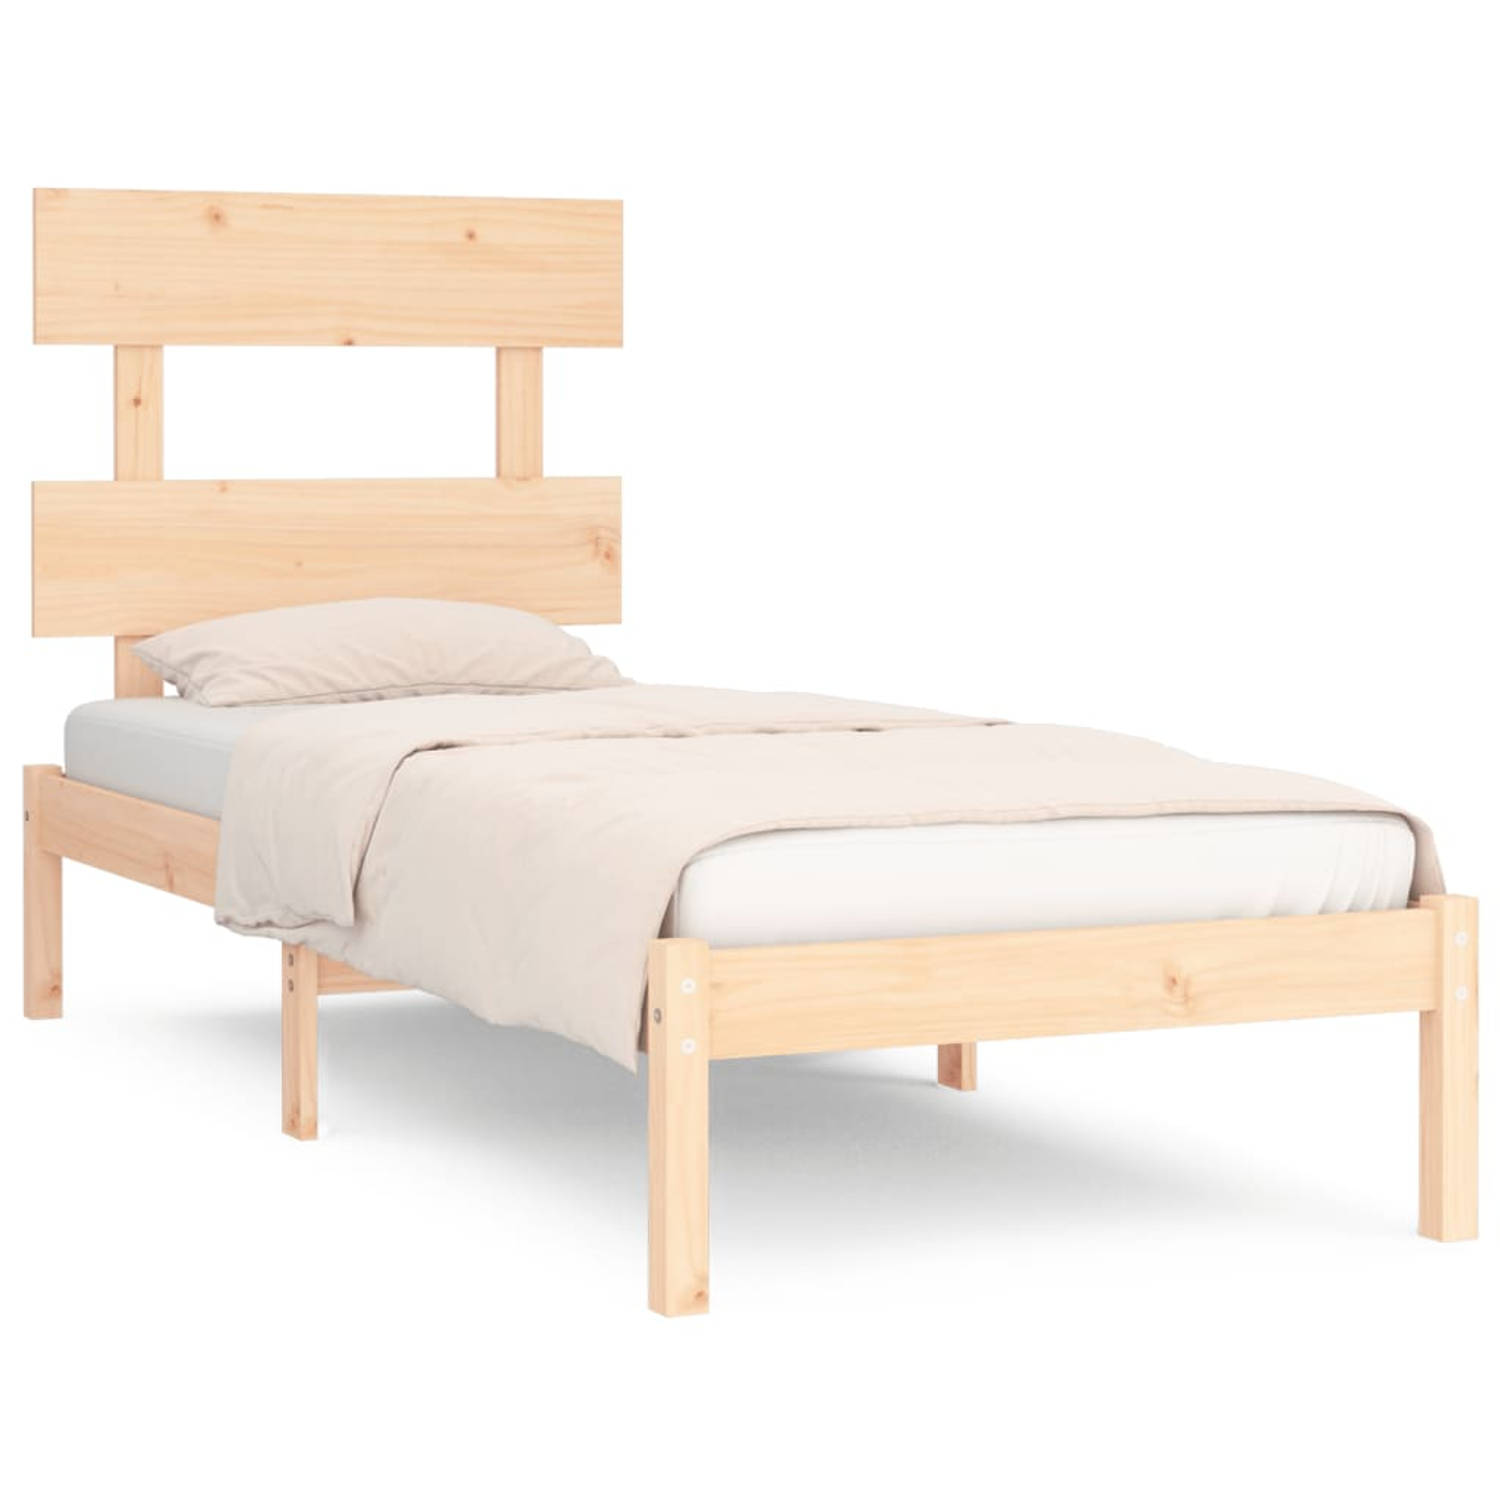 The Living Store Bedframe massief hout 100x200 cm - Bedframe - Bedframes - Eenpersoonsbed - Bed - Bedombouw - Frame - Bed Frame - Ledikant - Bedframe Met Hoofdeinde - Eenpersoonsbe